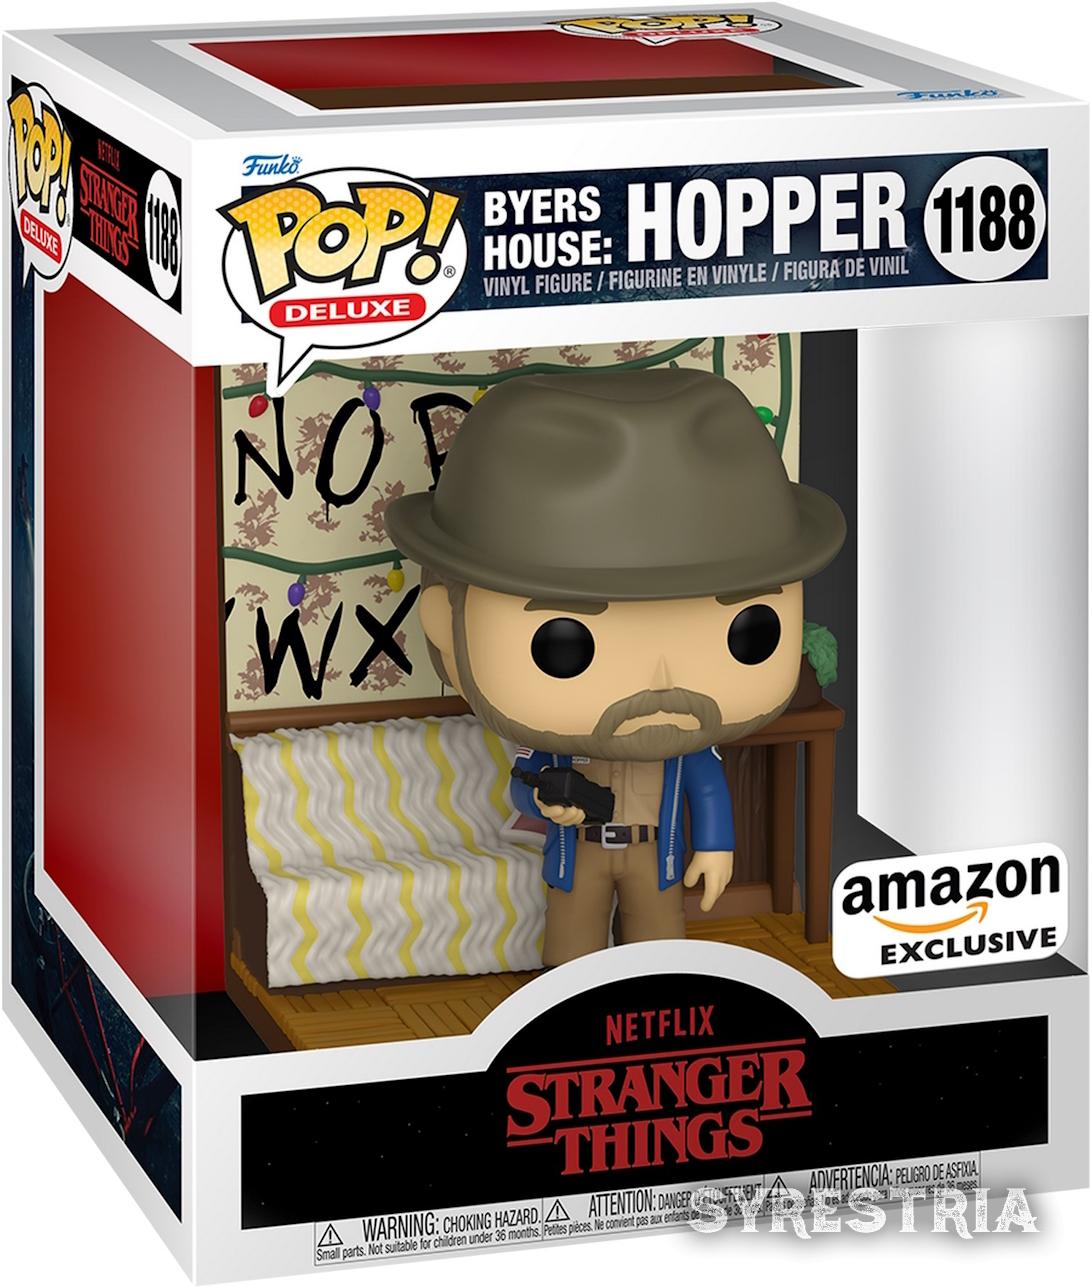 Stranger Things - Byers House: Hopper 1188 Amazon Exclusive - Funko Pop! Deluxe